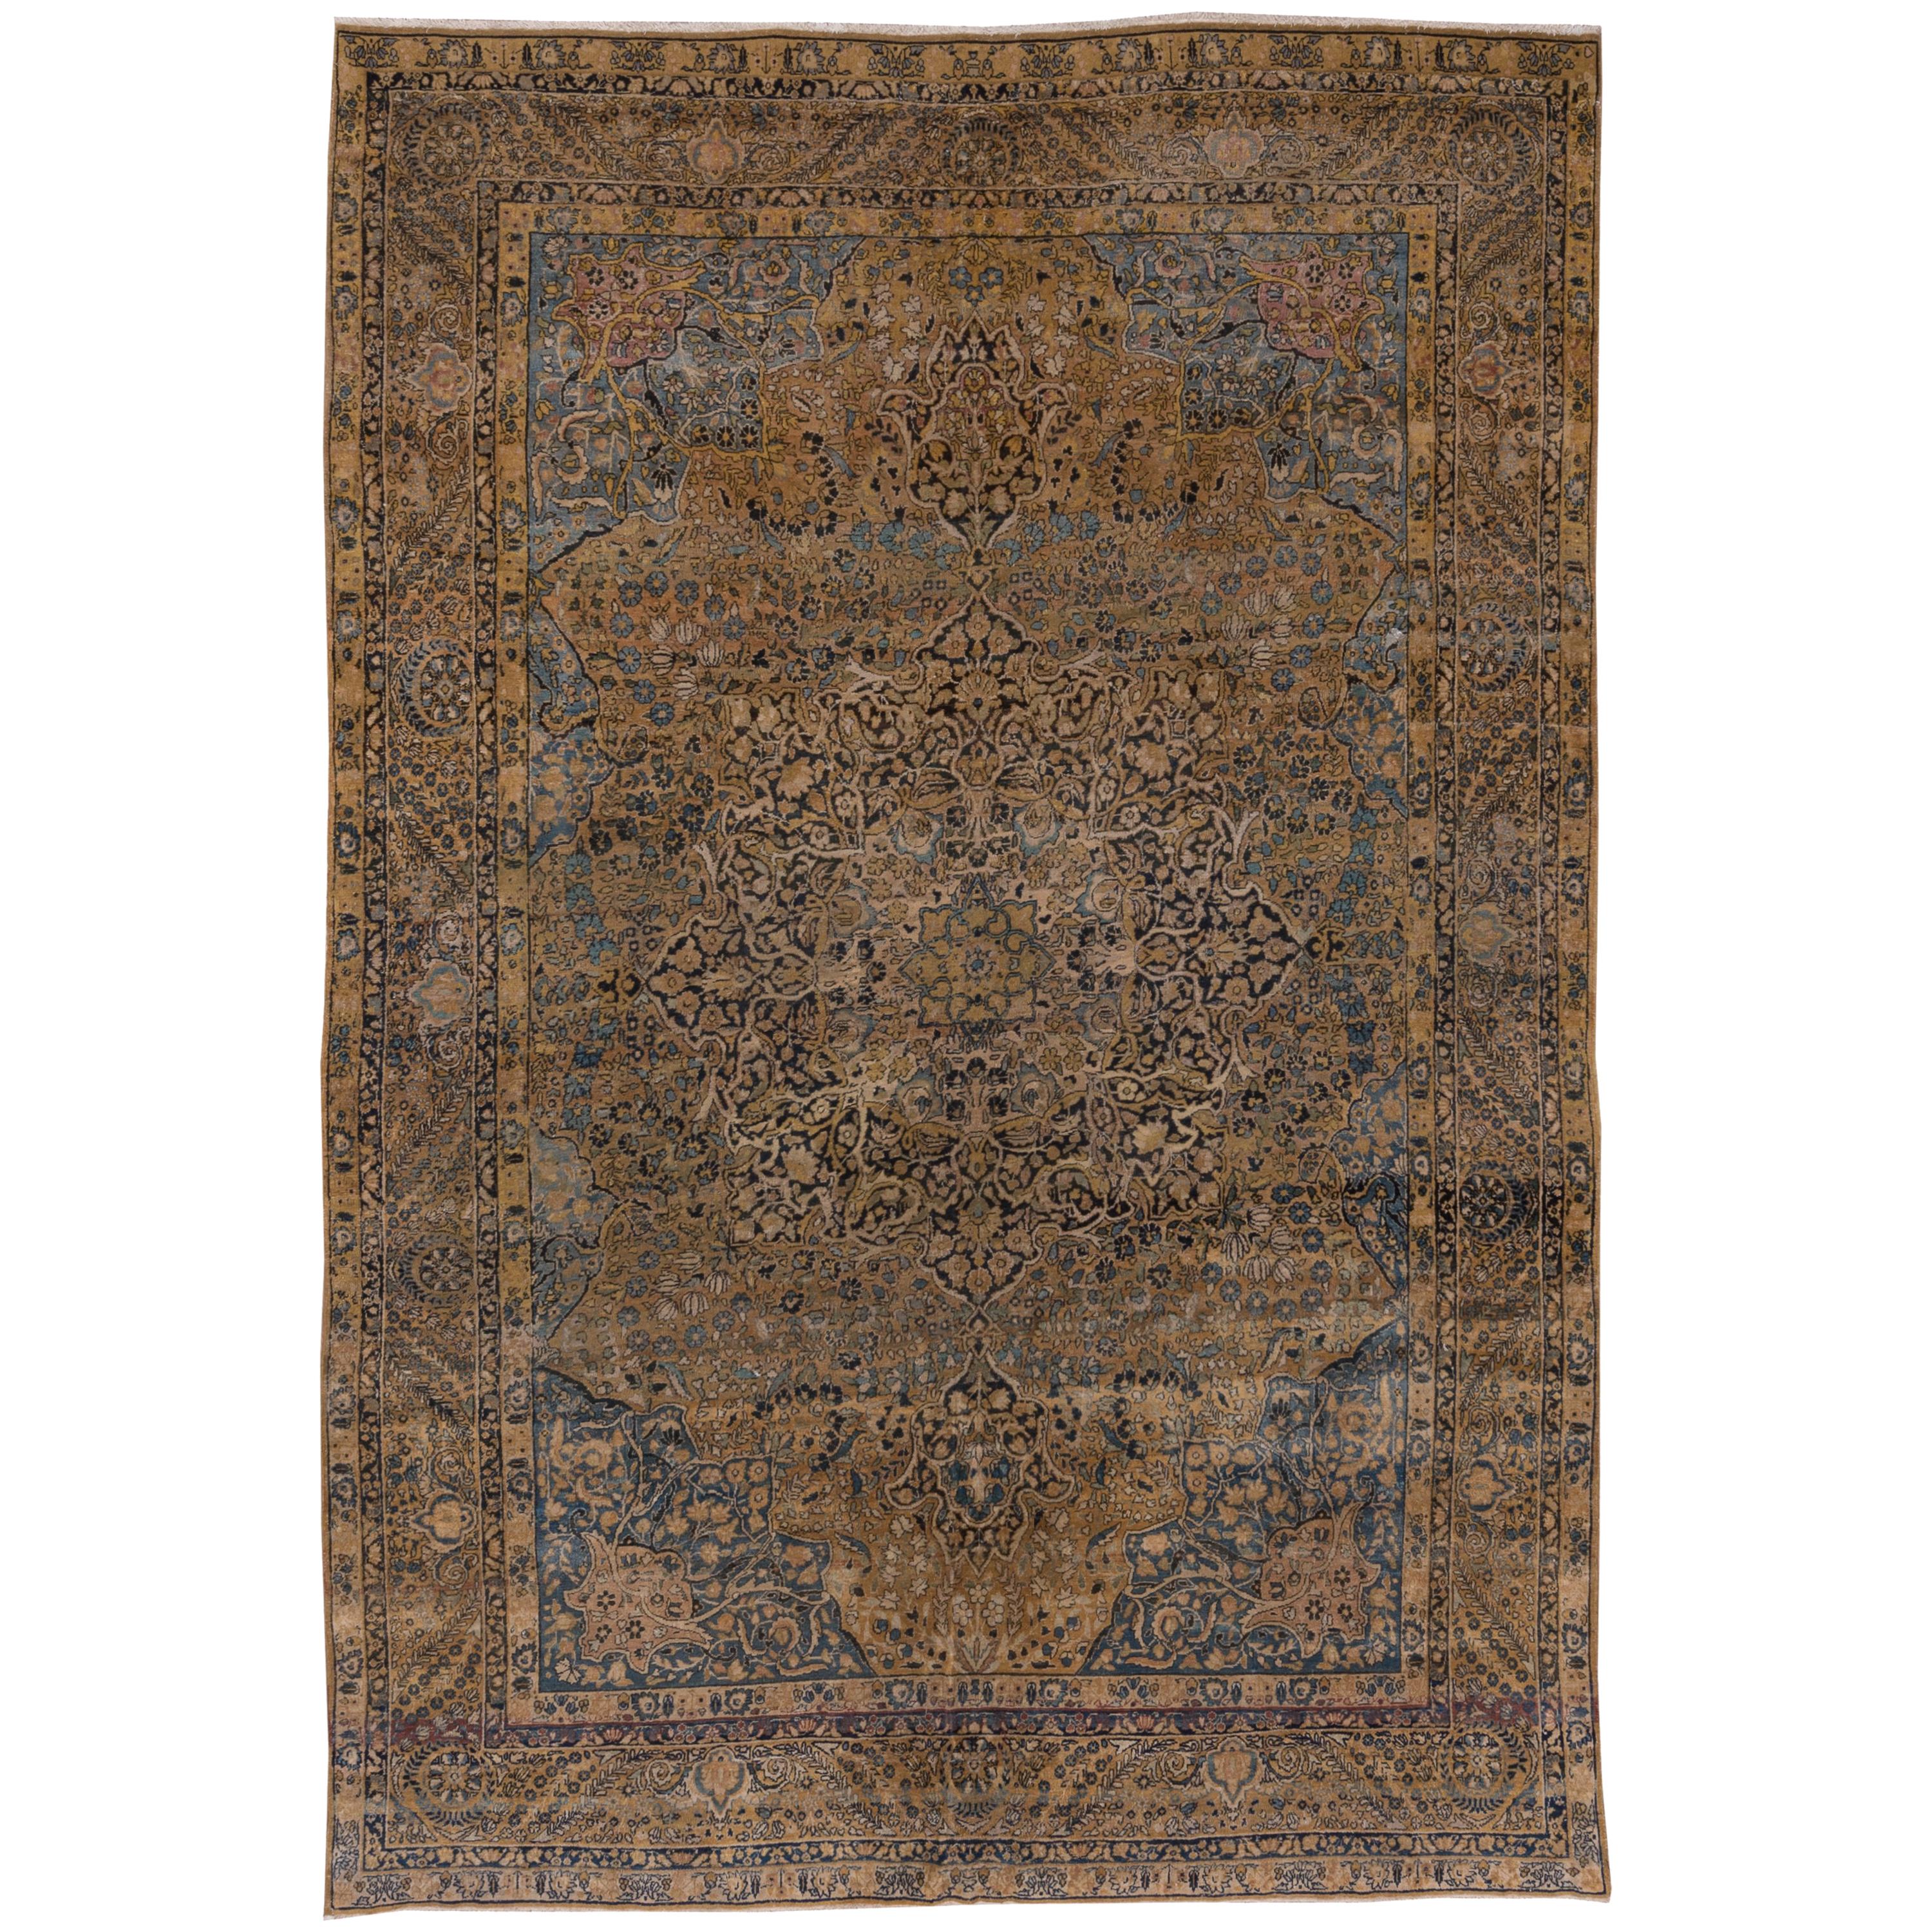 Antique Kerman Carpet, circa 1920s